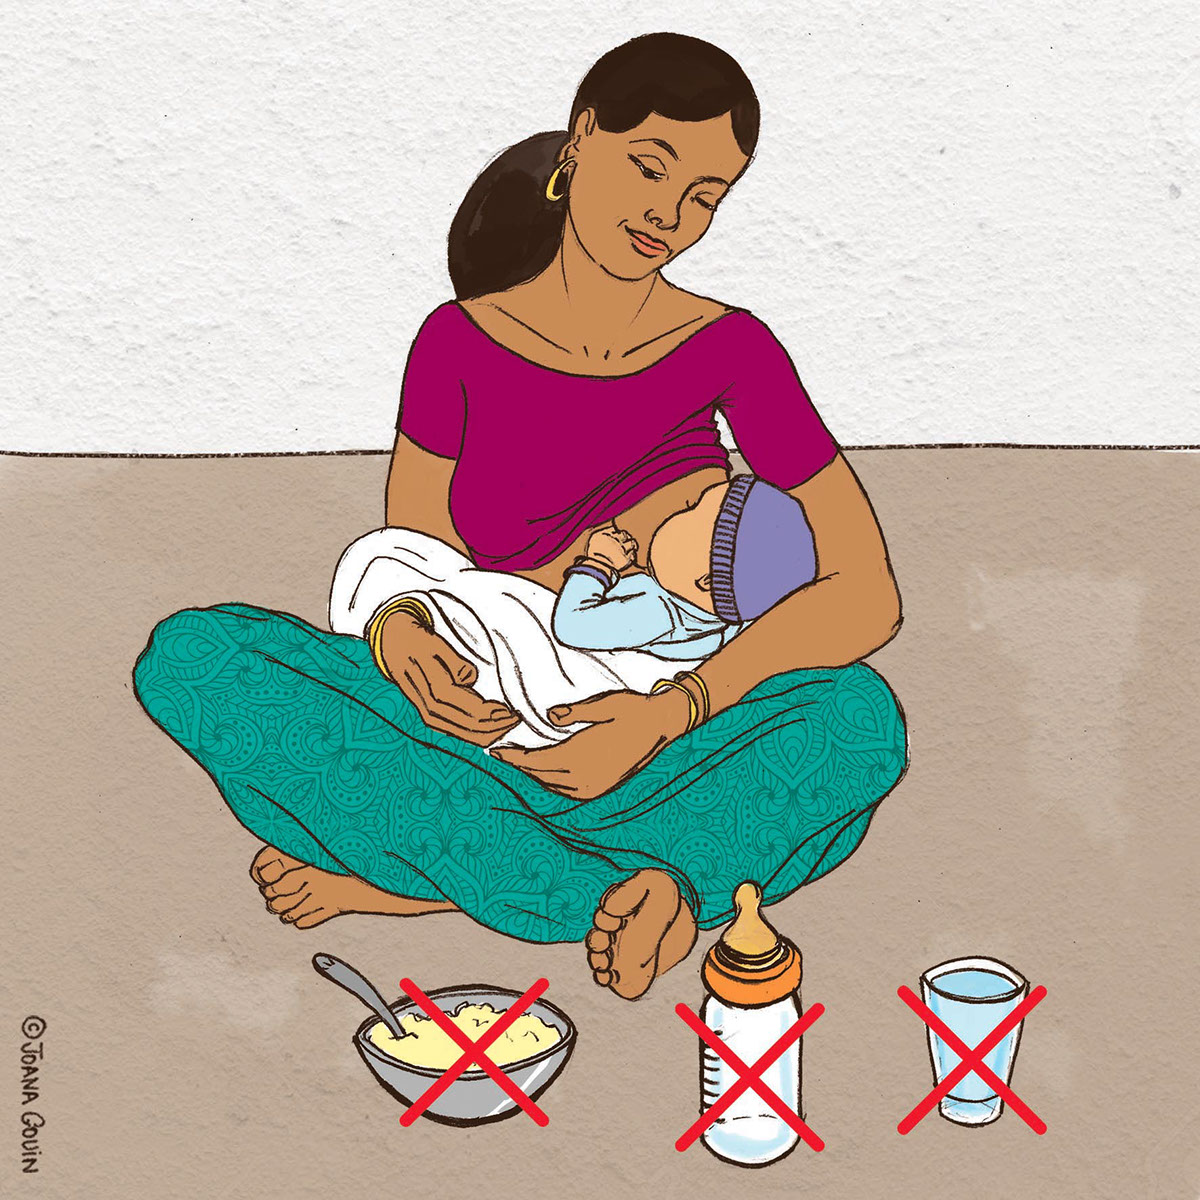 Adobe Portfolio Mother Health gujarat India health center breastfeedind danger signs delivery thermal care infant health